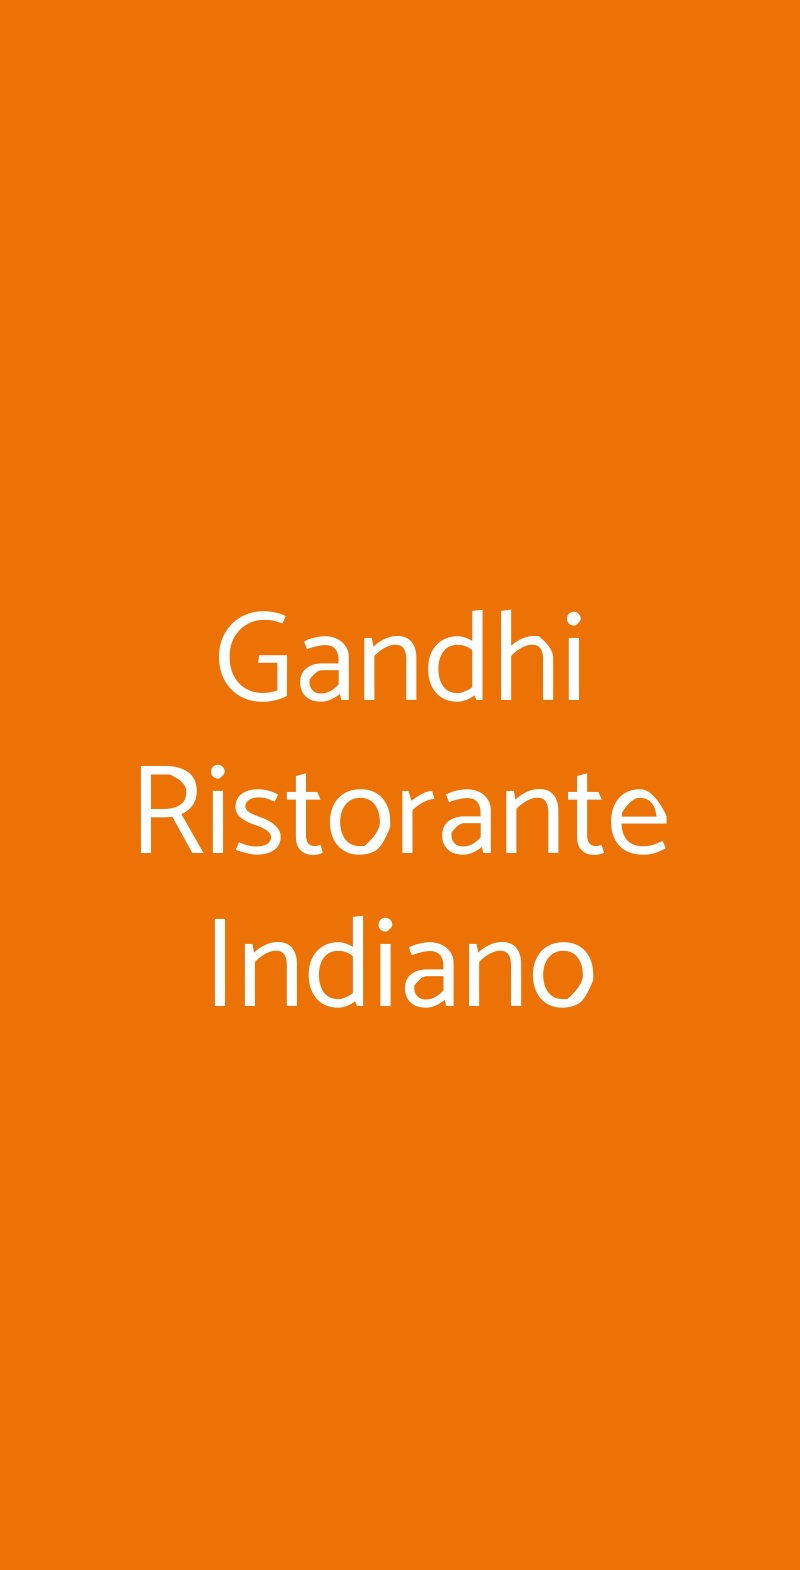 Gandhi Ristorante Indiano Firenze menù 1 pagina